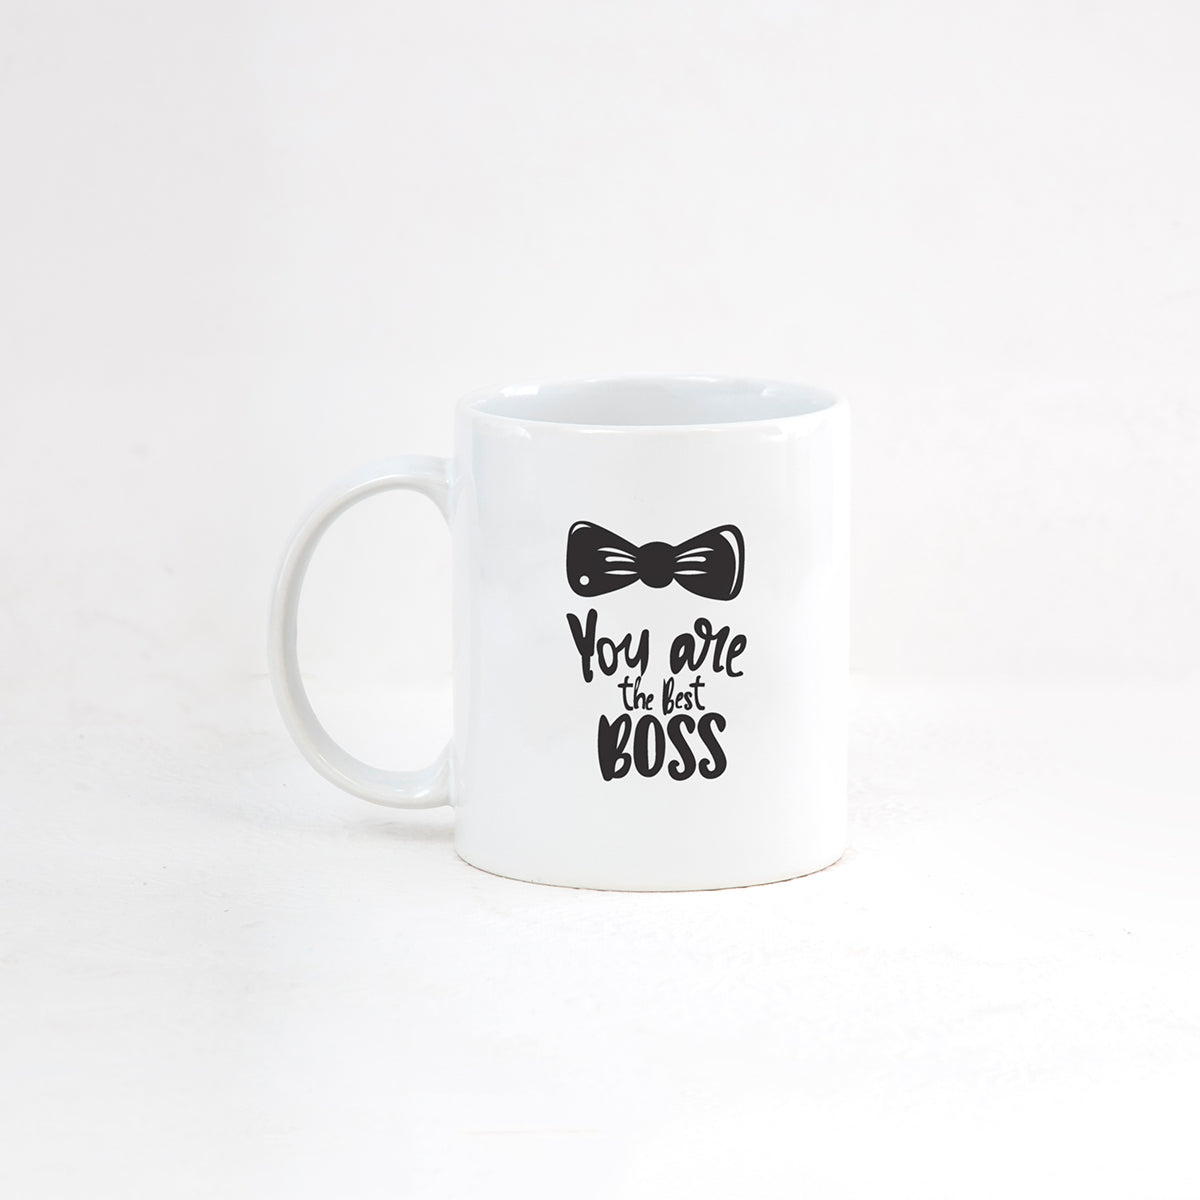 Swiss Coffee Mug, 1 piece, 300ml, Best Boss Ever